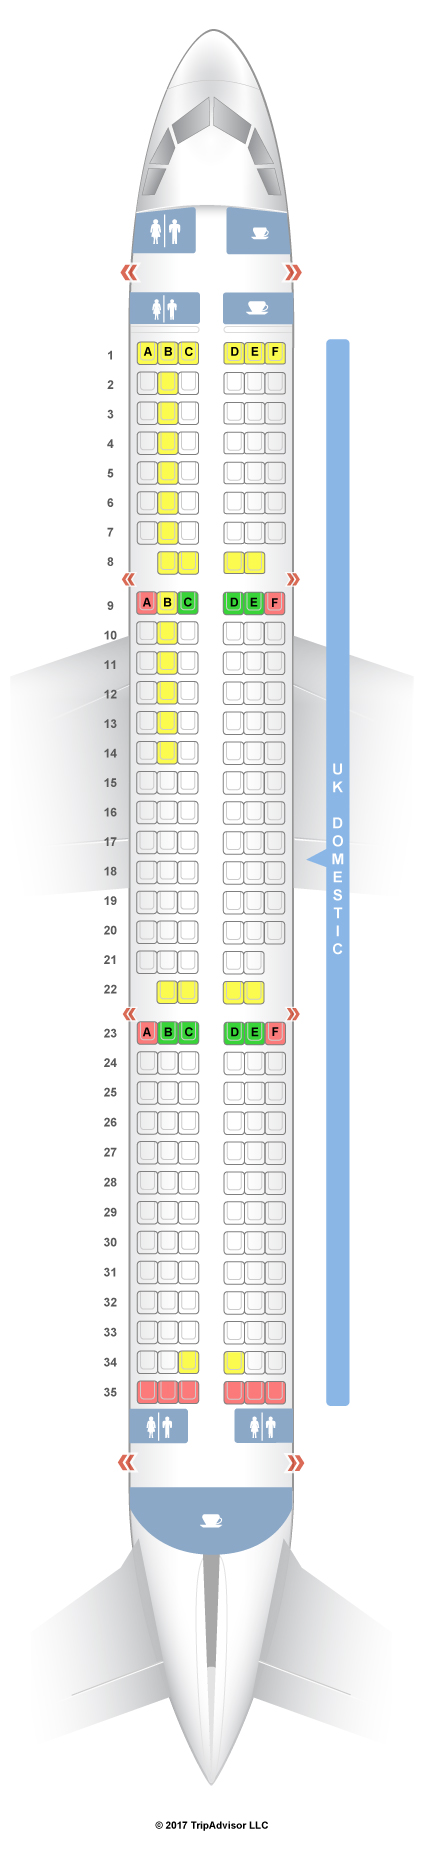 British Airways Airbus A321 Seating Chart